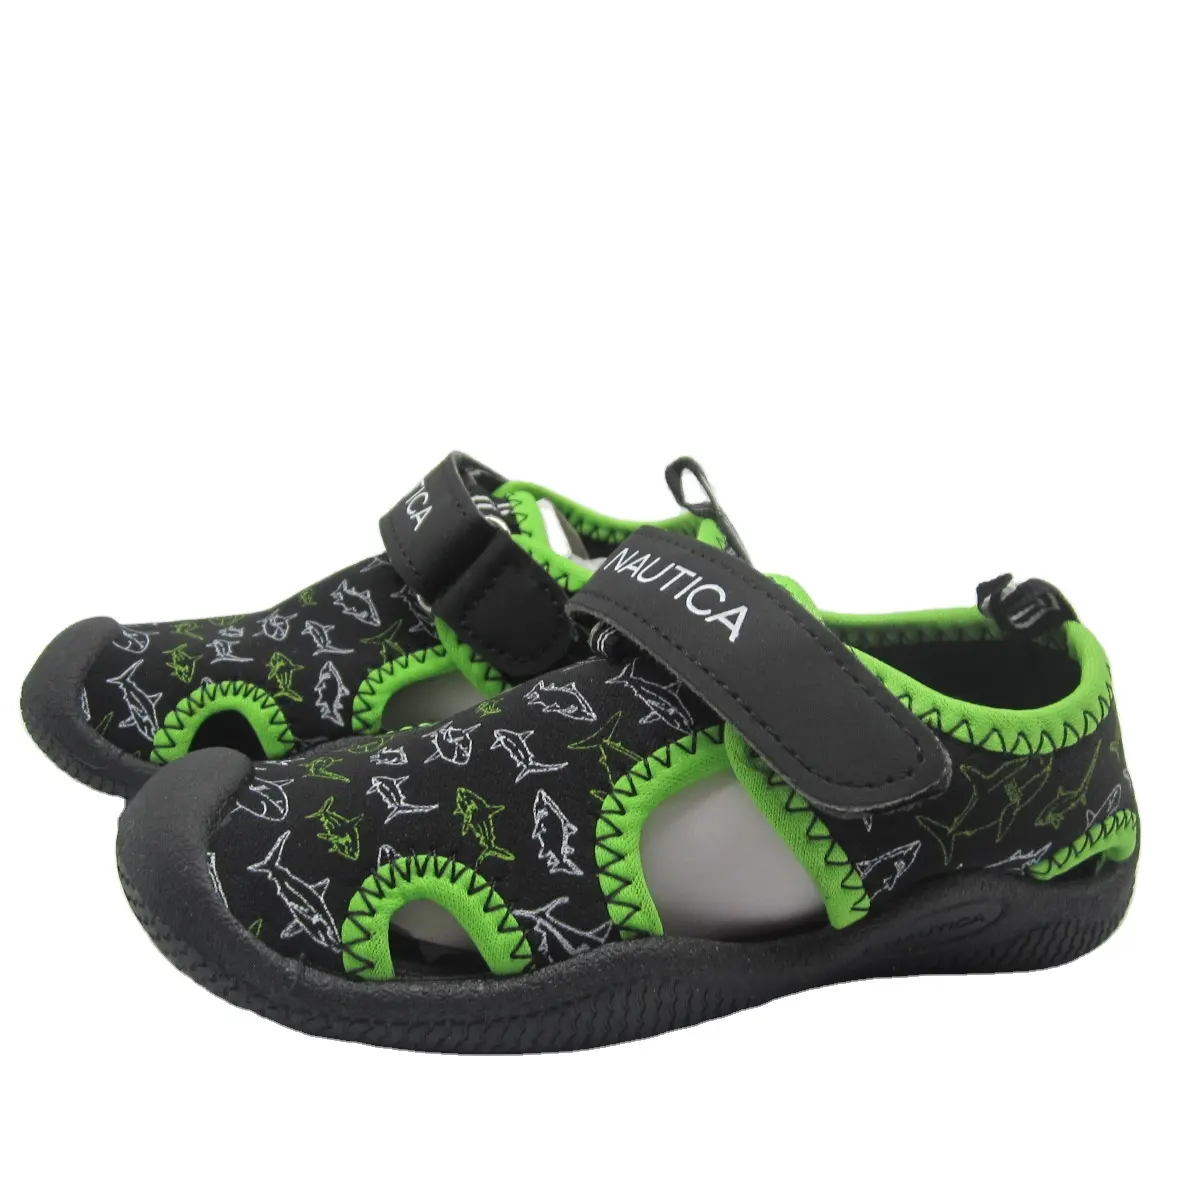 Boy Toddler Water Shoes Quick Dry Beach Walking Shoes Lightweight for Kids Indoor Outdoor Aqua Socks